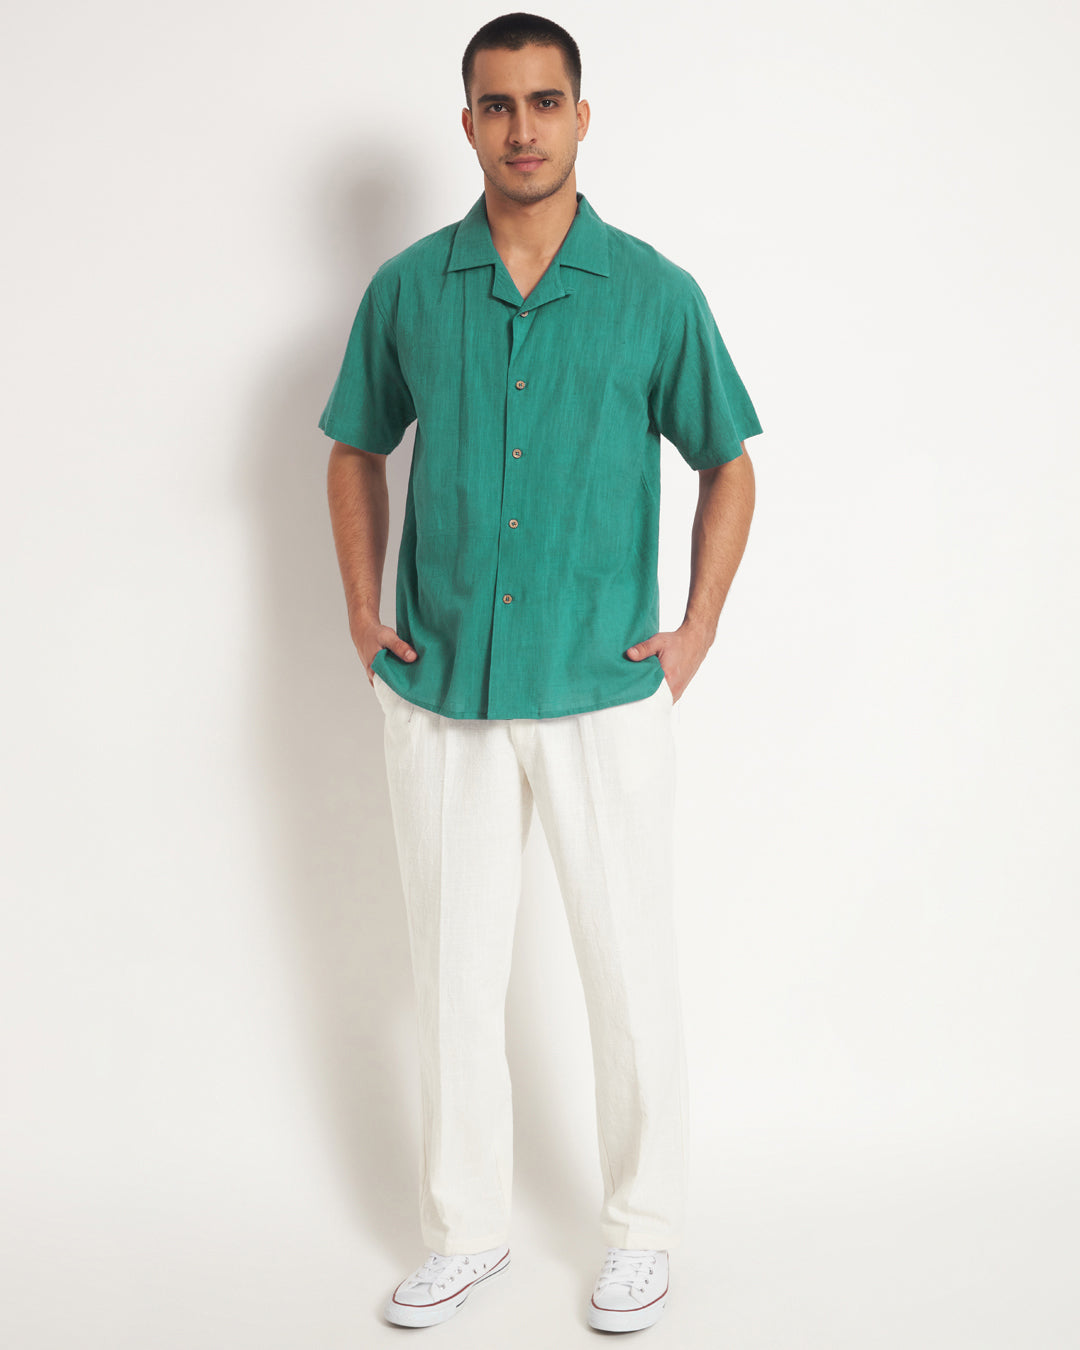 Combo: Classic Valley Vista Half Sleeves Men's Shirt & Pants